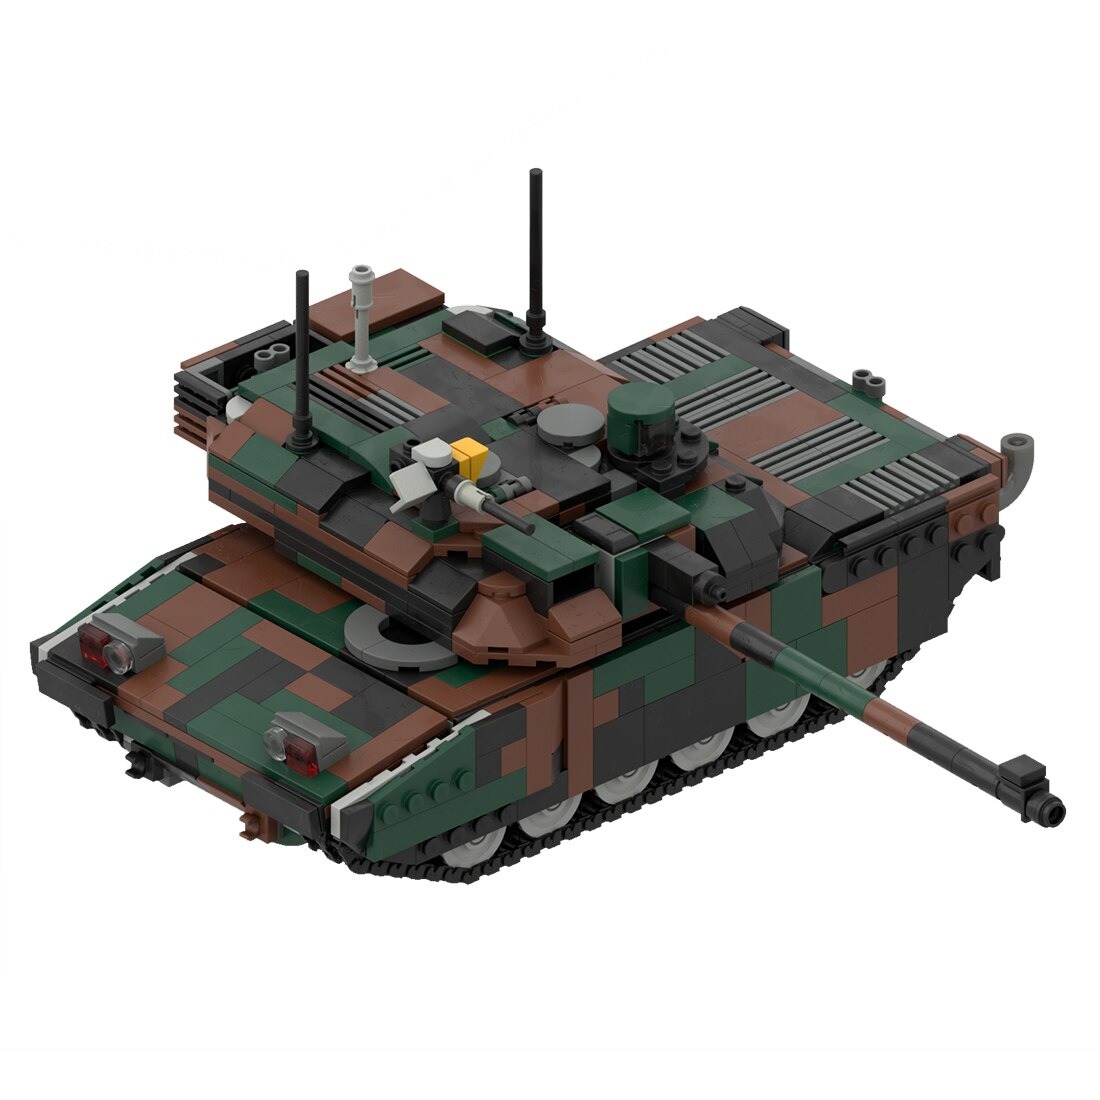 moc 34858 leclerc main battle tank model main 2 - MOULD KING